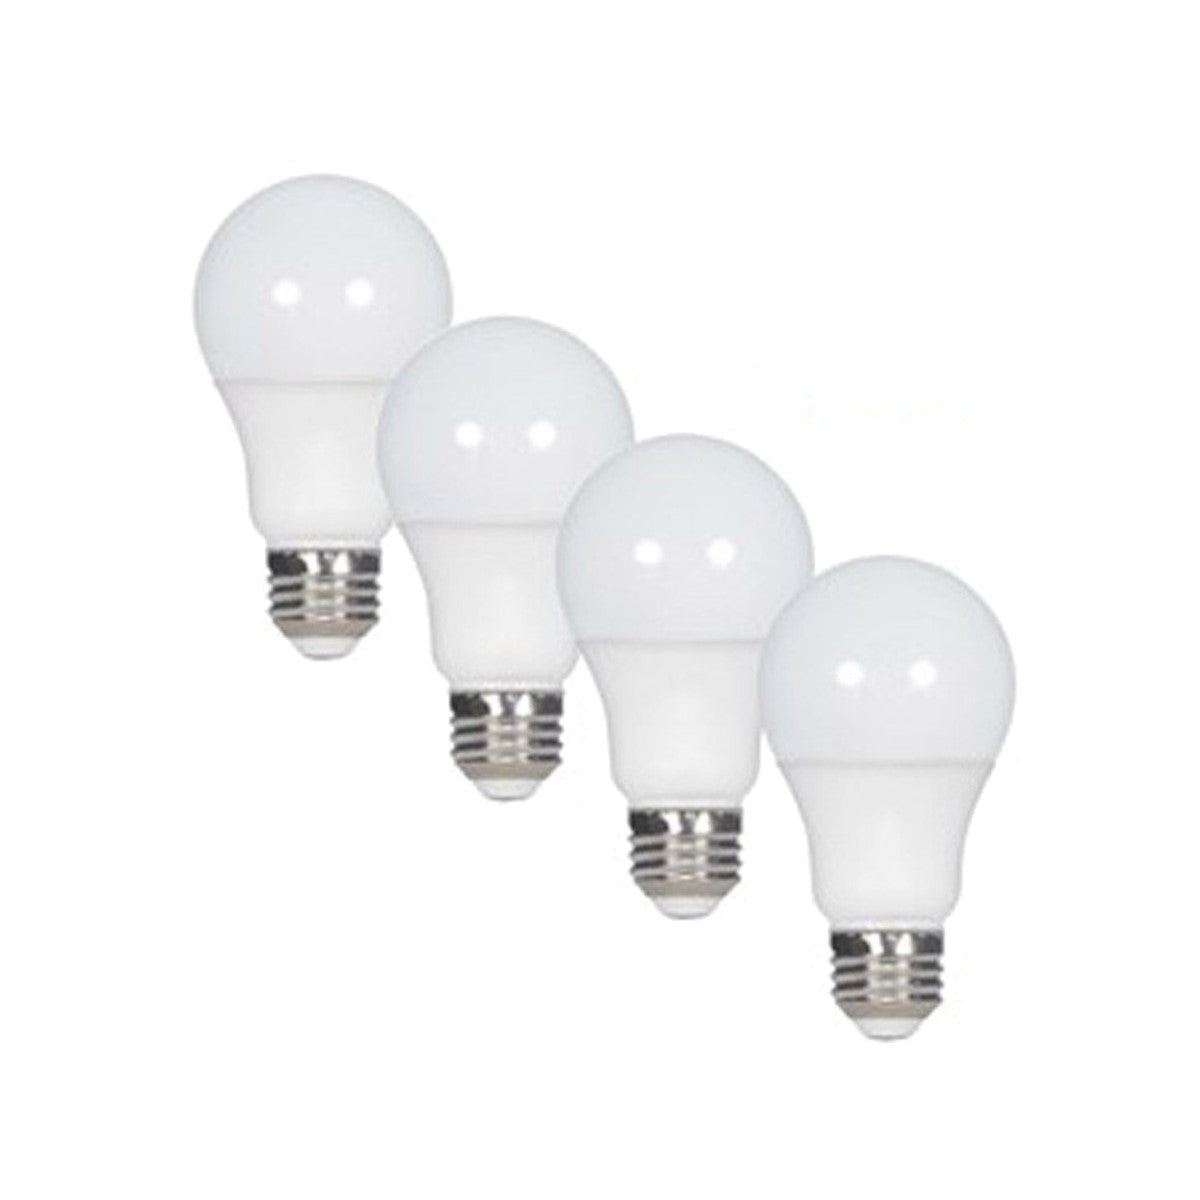 A19 LED Bulb, 100W Equivalent, 16 Watt, 1490 Lumens, 3000K, E26 Medium Base, Frosted Finish, Pack Of 4